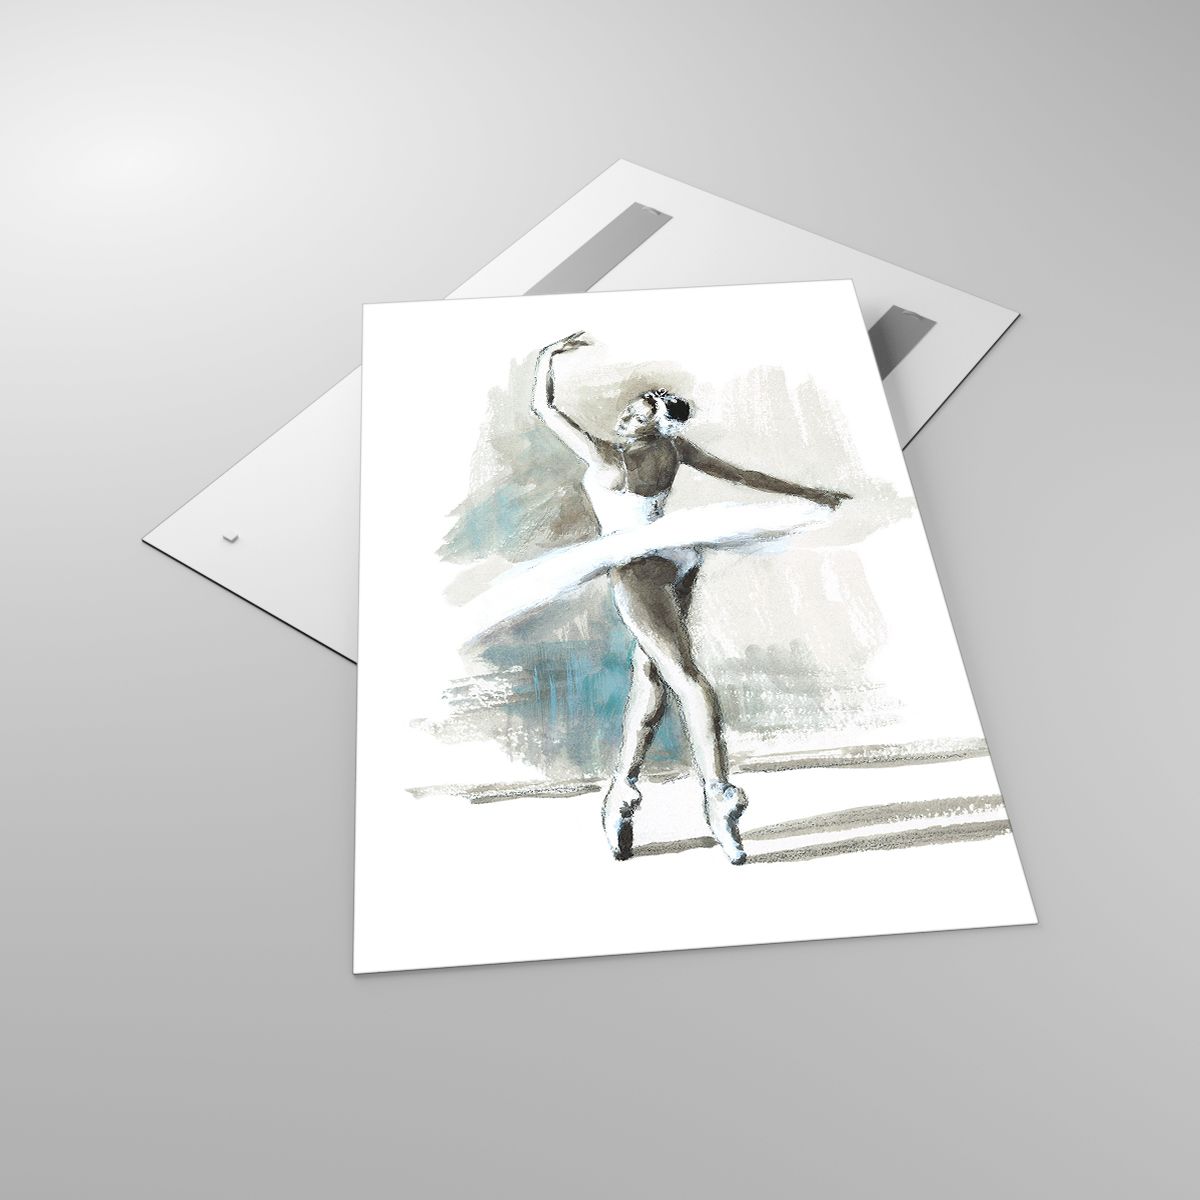 Obraz na plátne Ballerina, Obraz na plátne Dans, Obraz na plátne Ballet, Obraz na plátne Grafische Afbeeldingen, Obraz na plátne Schilderen